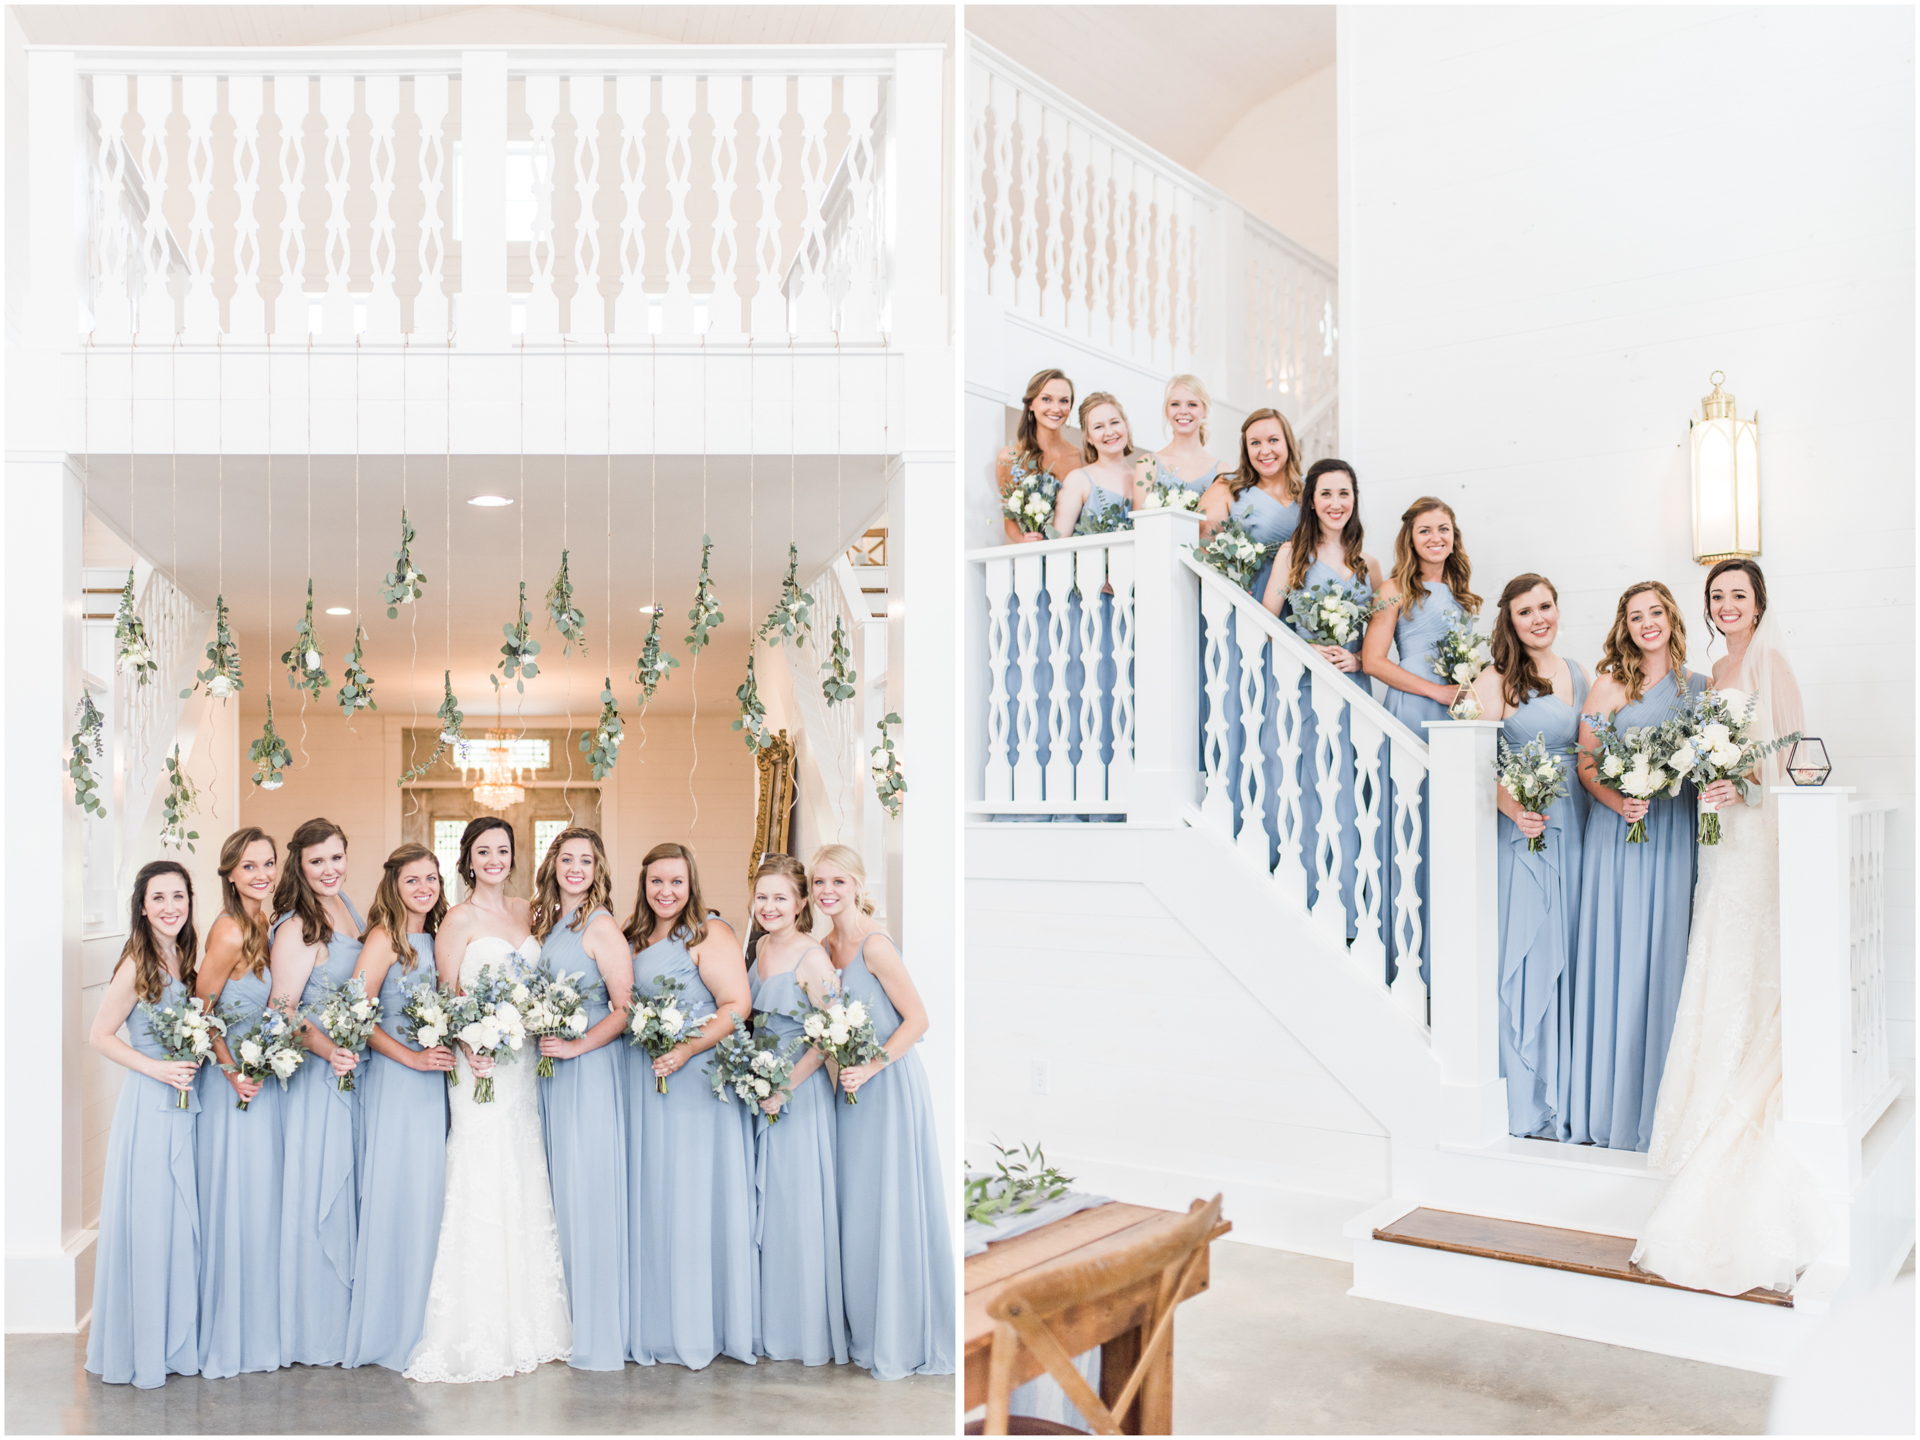 Dusty Blue Bridesmaids photo - white barn wedding - indoor portrait - Huntsville Alabama